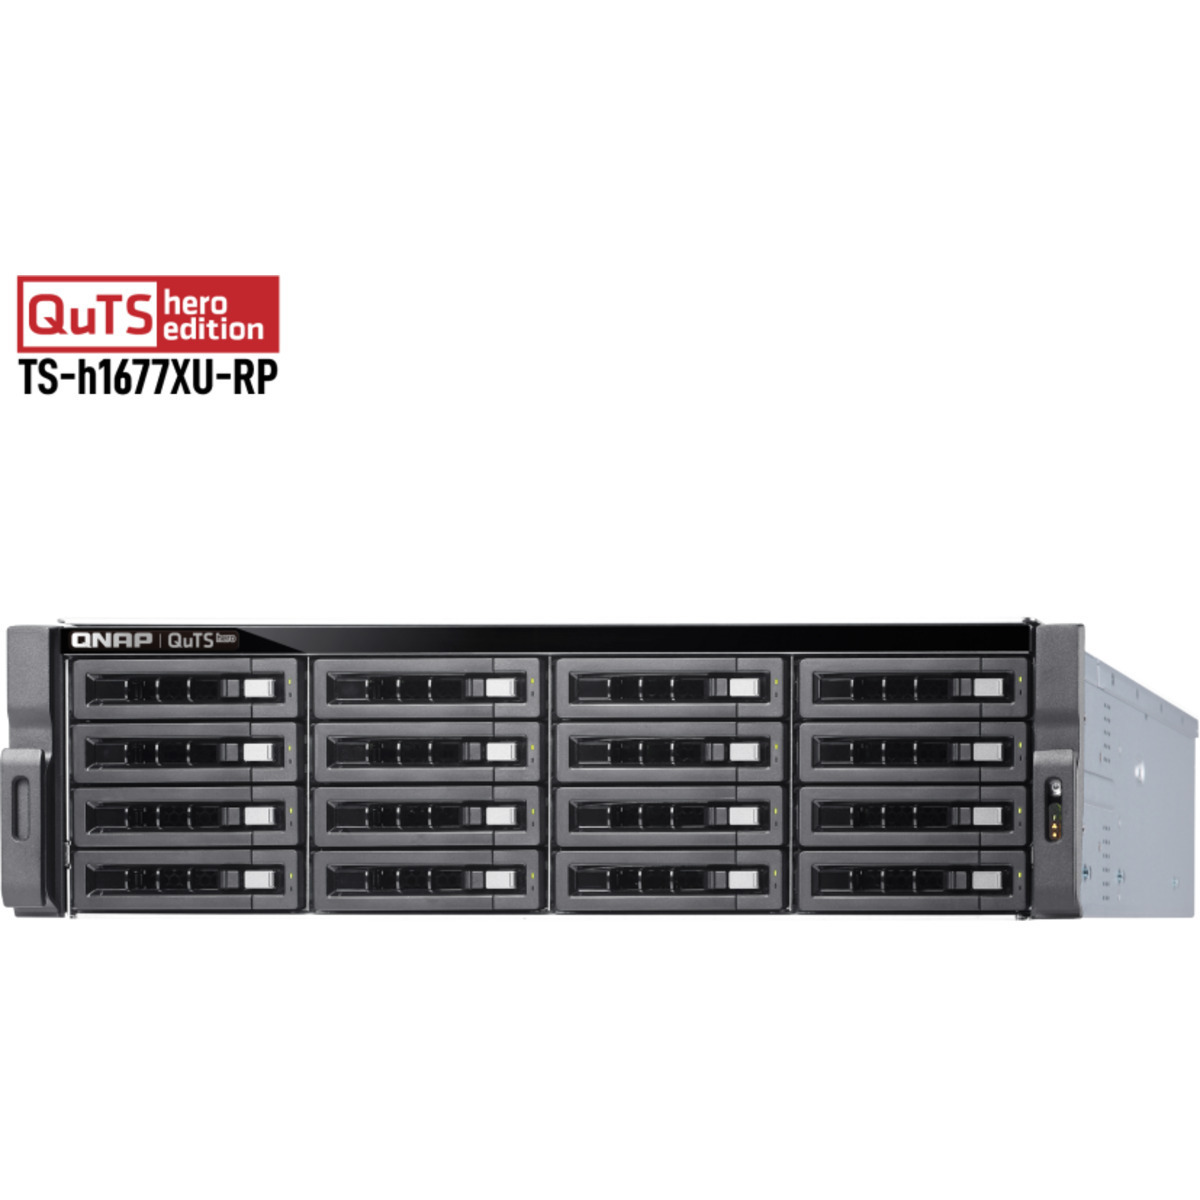 buy $7103 QNAP TS-h1677XU-RP QuTS hero Edition 16tb RackMount NAS - Network Attached Storage Device 16x1000gb Samsung 870 QVO MZ-77Q1T0 2.5 560/530MB/s SATA 6Gb/s SSD CONSUMER Class Drives Installed - Burn-In Tested - nas headquarters buy network attached storage server device das new raid-5 free shipping usa TS-h1677XU-RP QuTS hero Edition